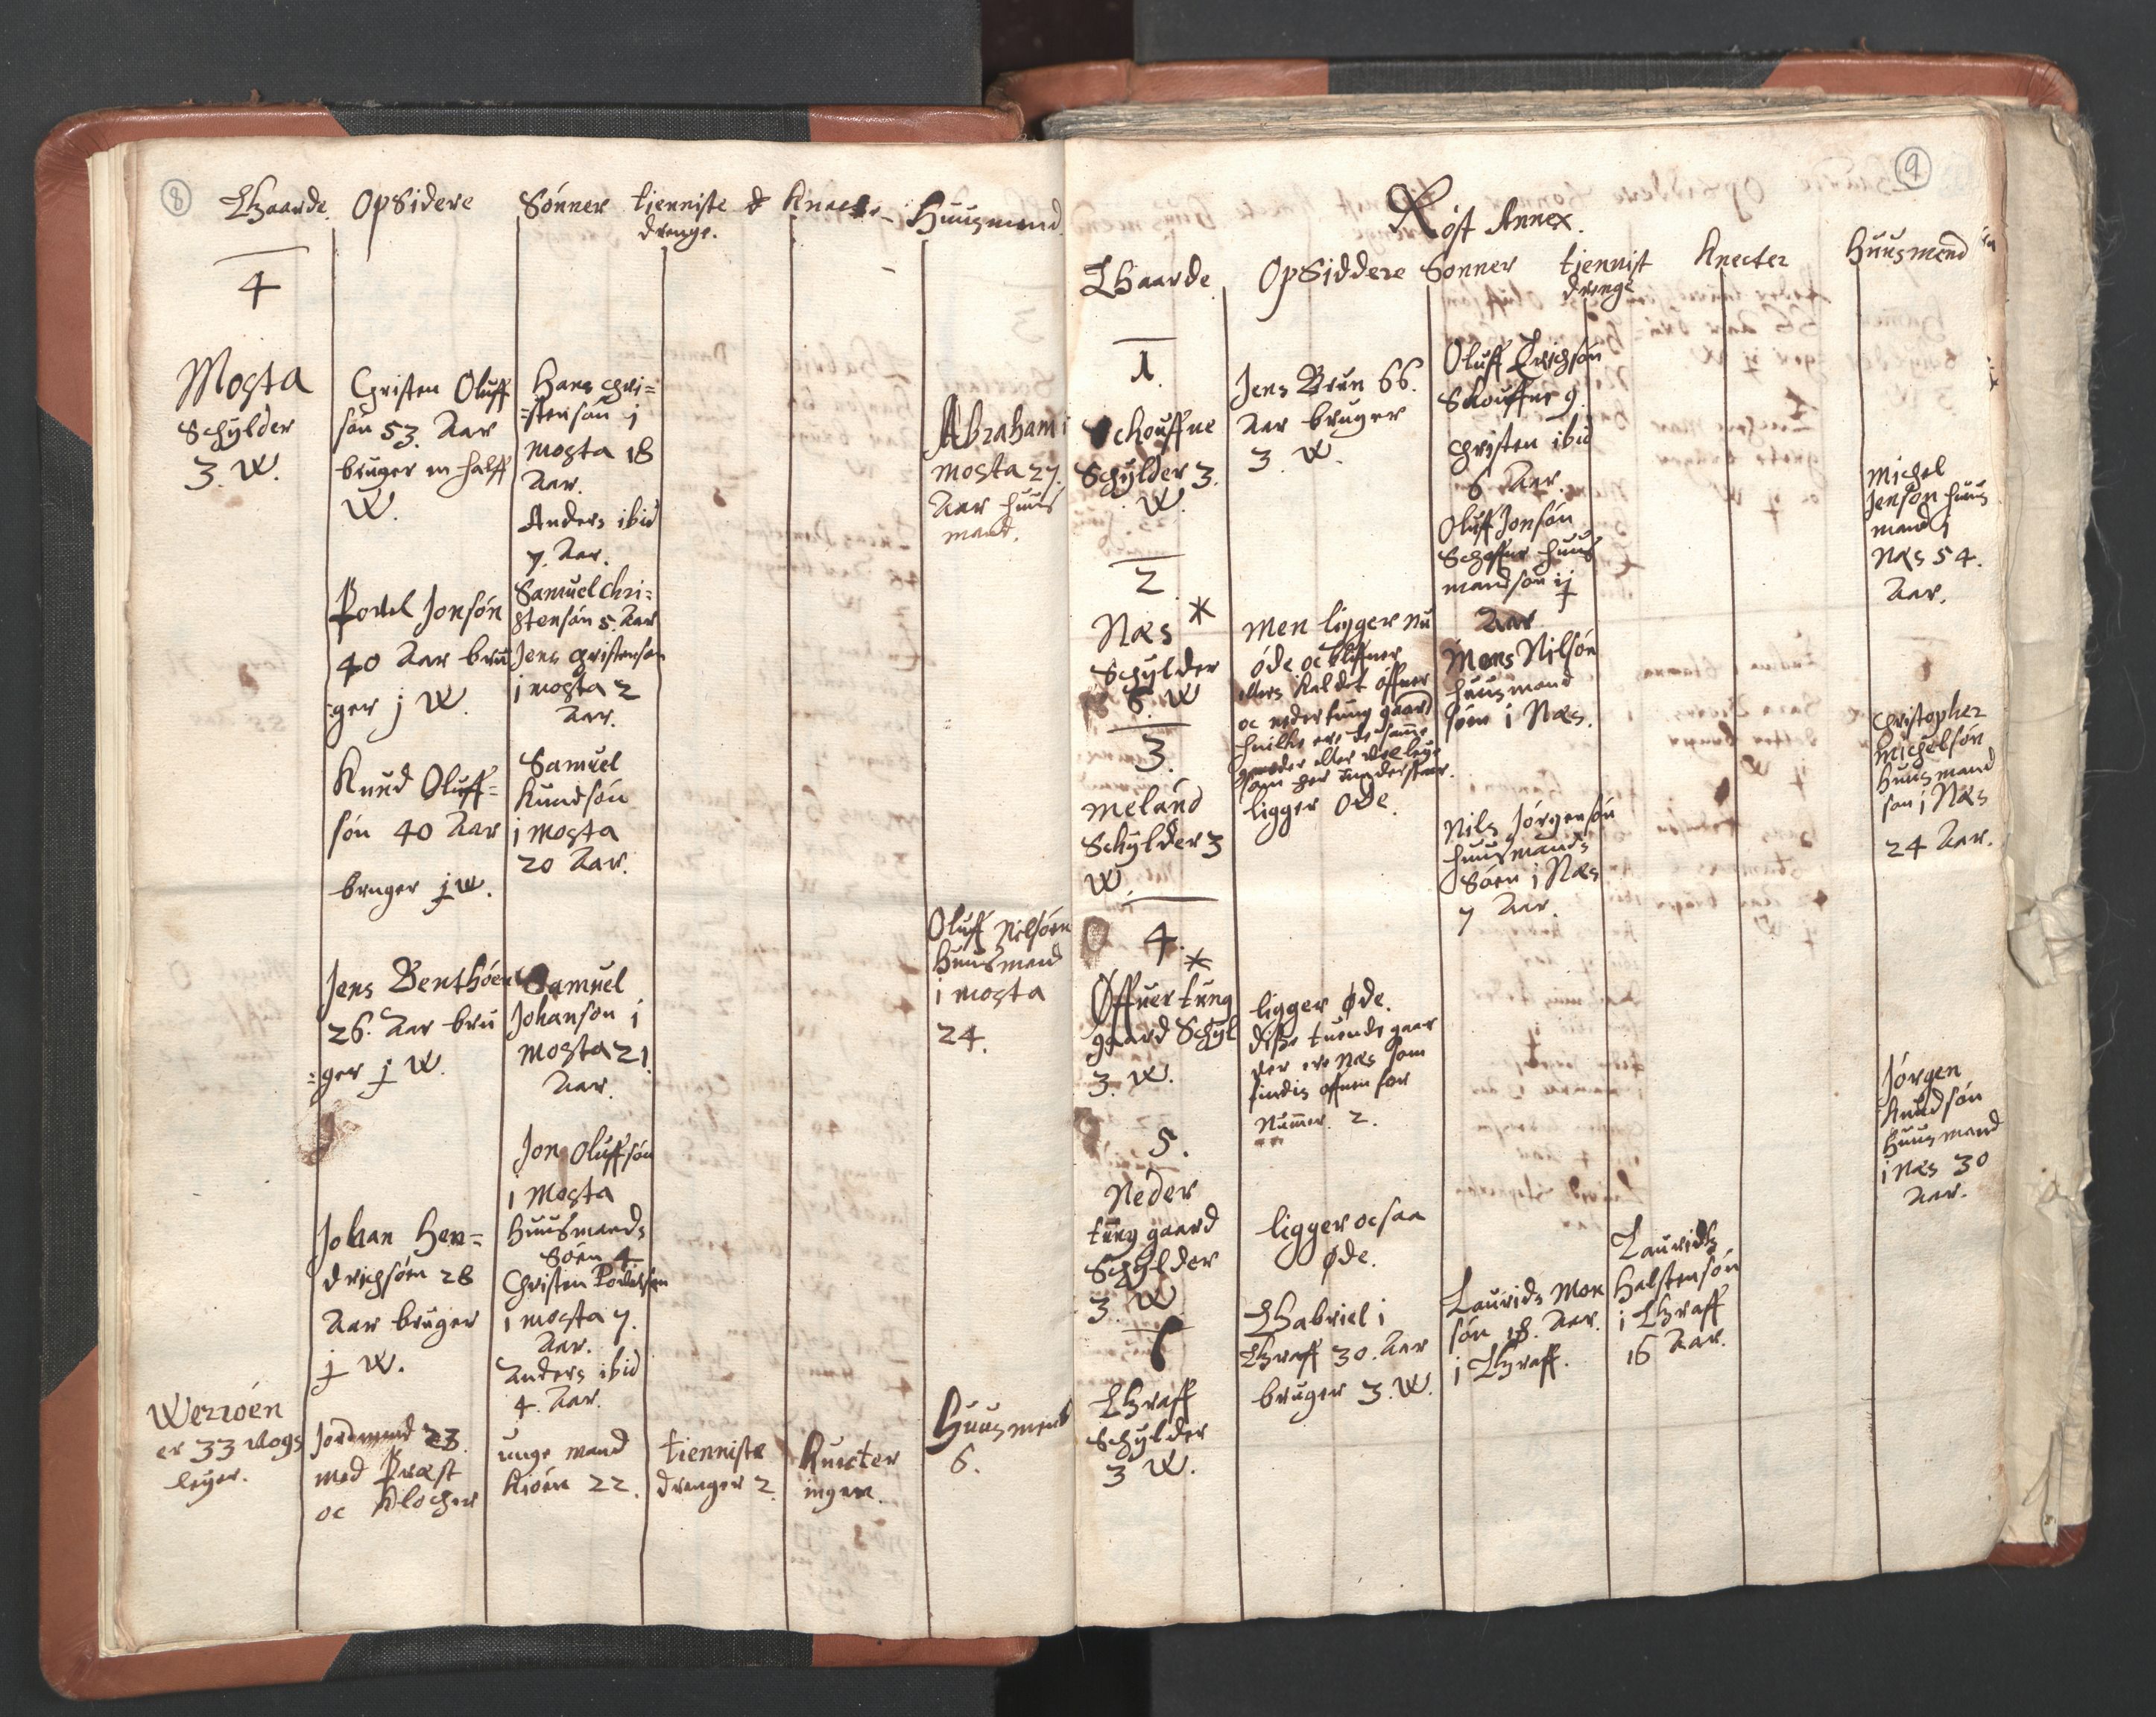 RA, Vicar's Census 1664-1666, no. 36: Lofoten and Vesterålen deanery, Senja deanery and Troms deanery, 1664-1666, p. 8-9